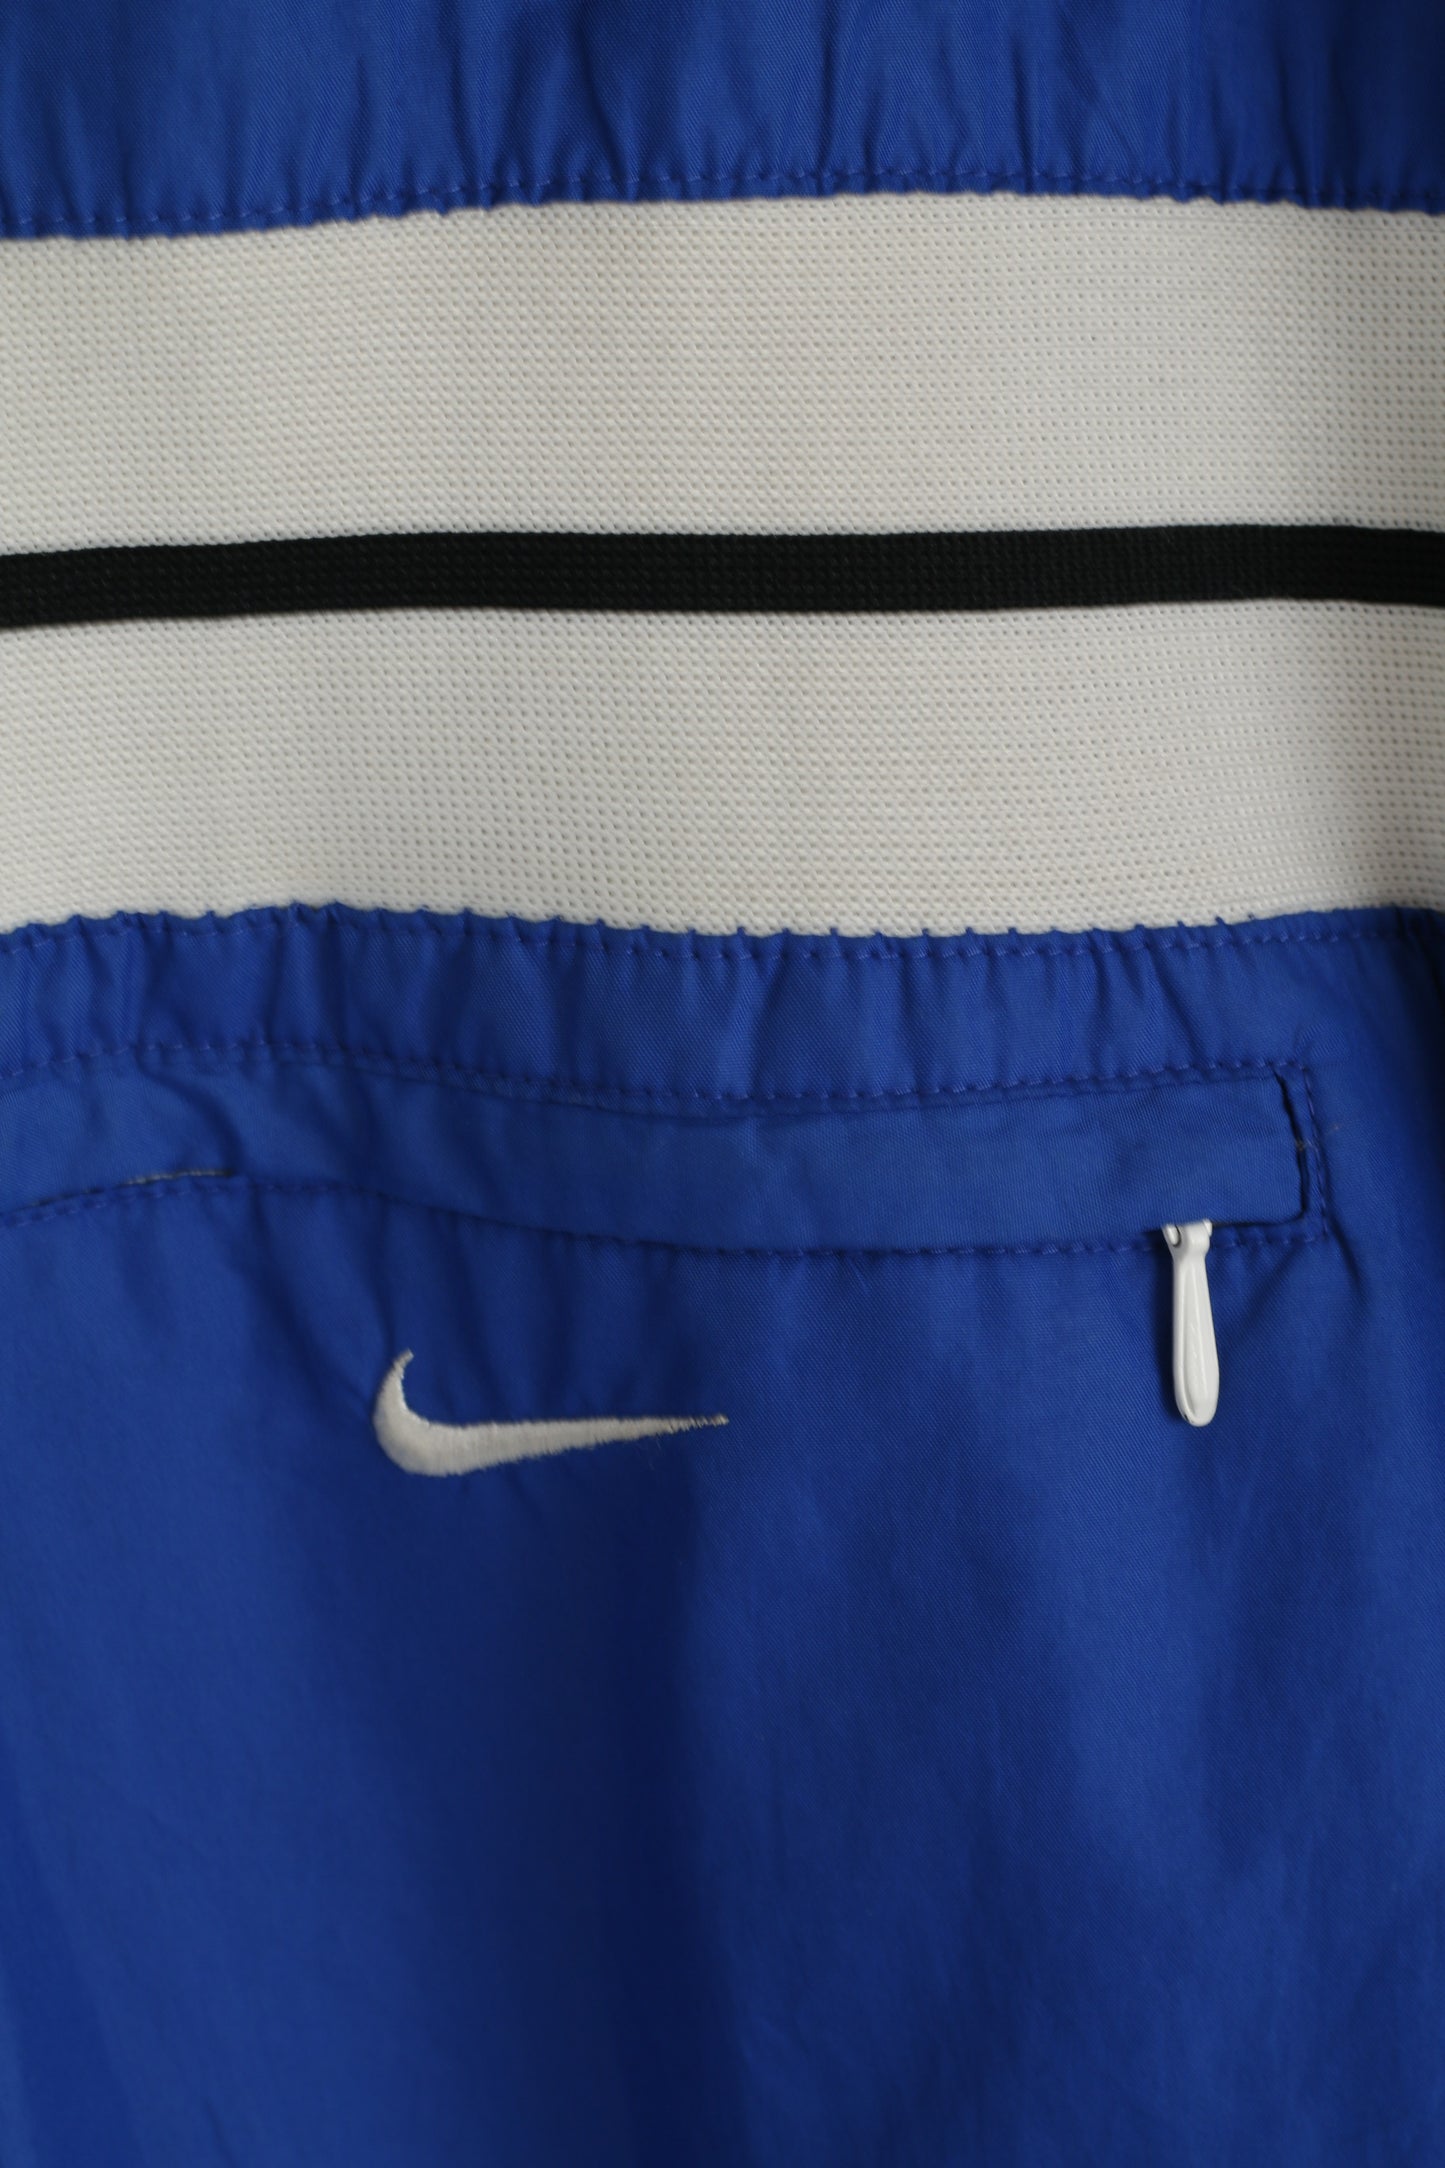 Nike Youth 18-20 Age Jacket Blue Sport Training Full Zipper Activewear Top